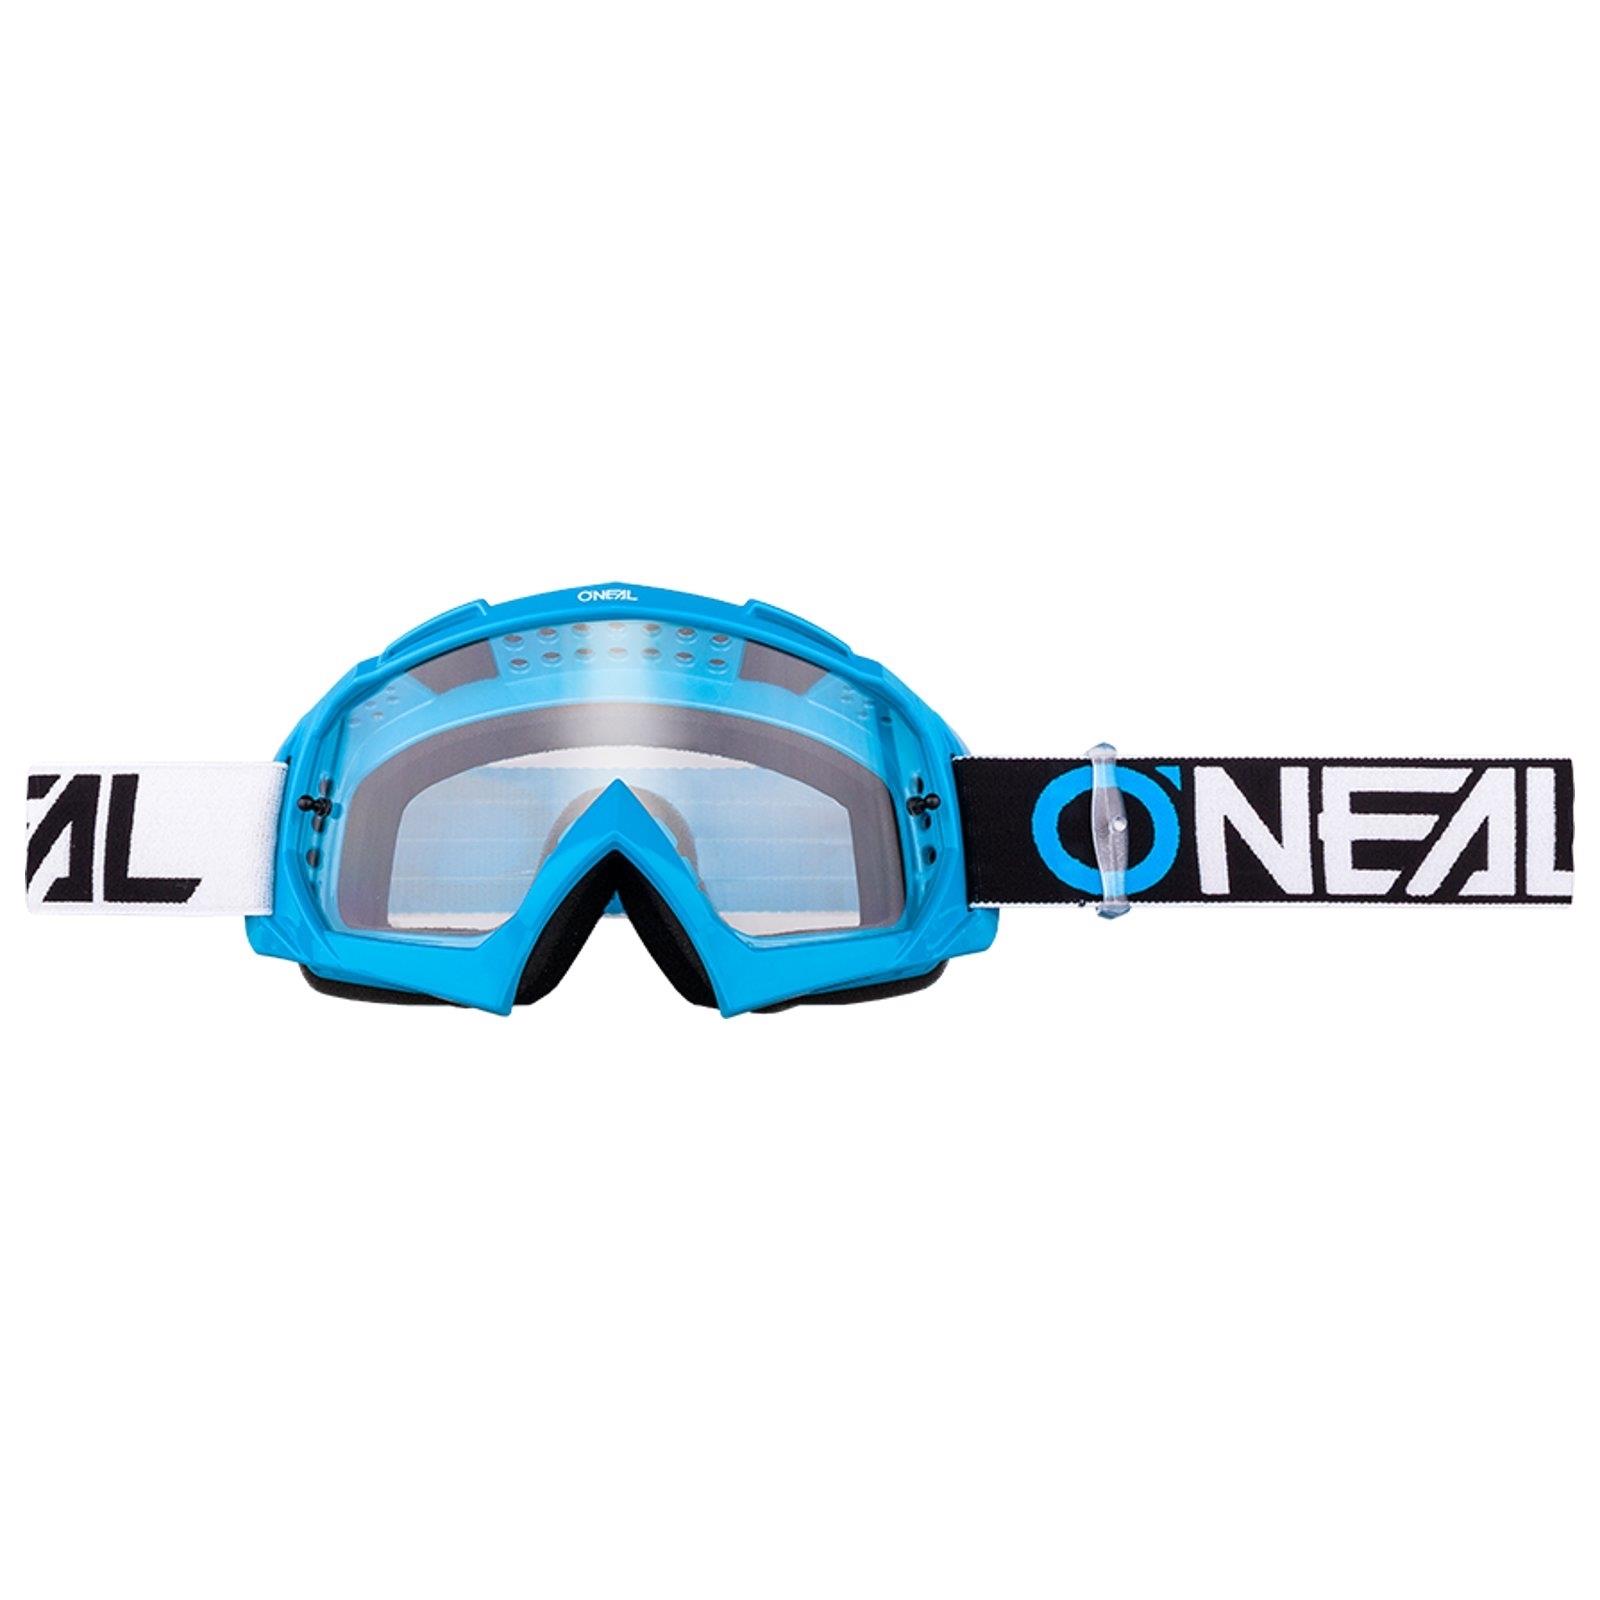 ONeal B-10 Goggle Stream MX Brille Klar Moto Cross DH Downhill Anti-Fog MTB 